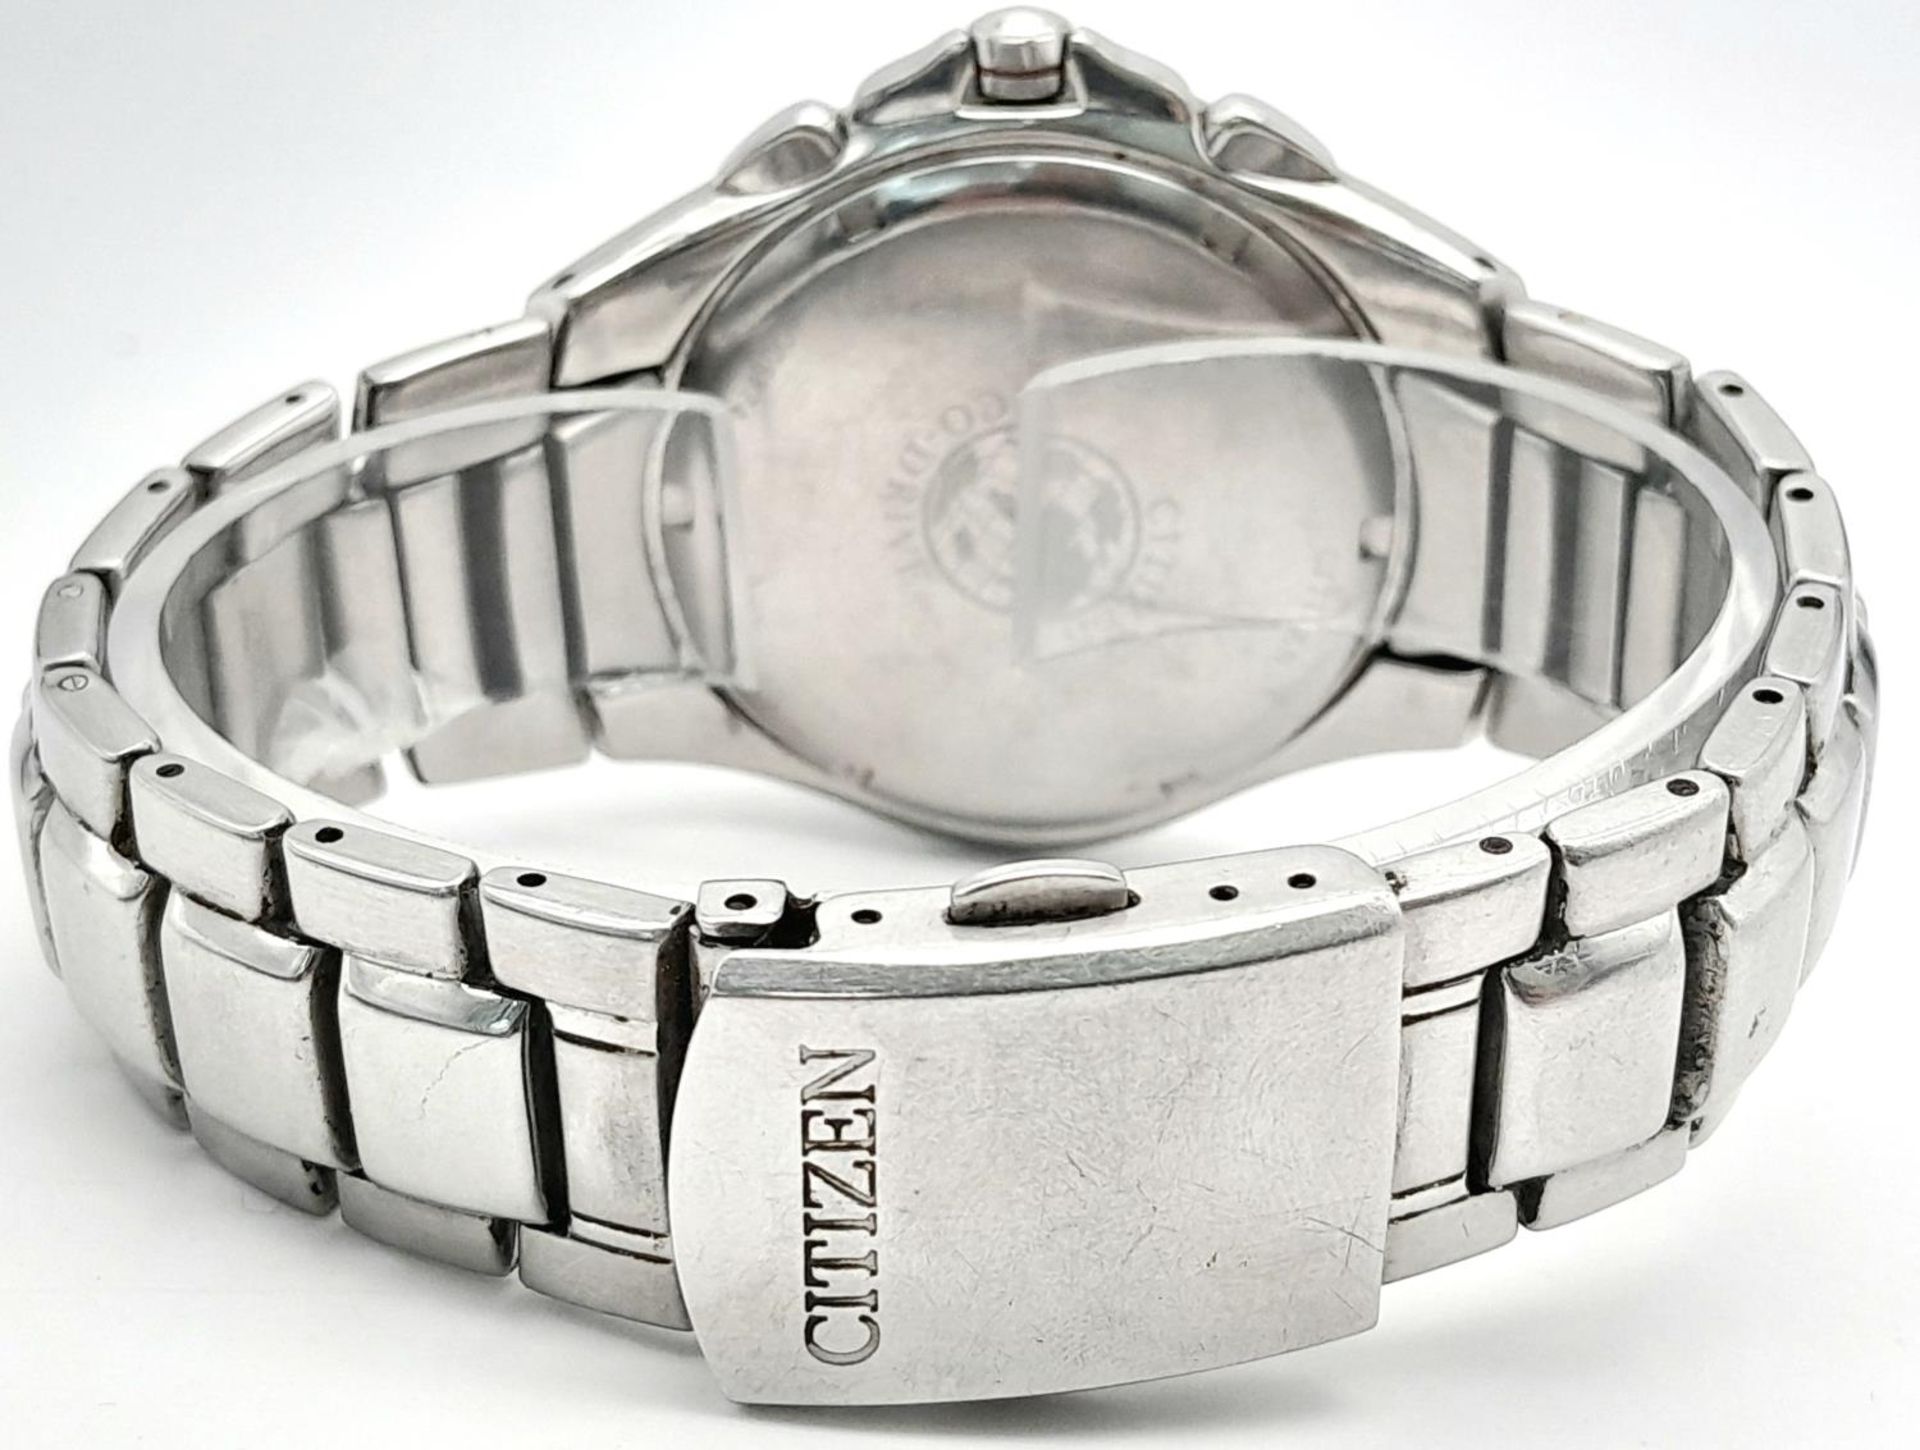 A Citizen Eco Drive Chronograph Gents Watch. Stainless steel bracelet and case - 42mm. Black dial - Bild 4 aus 6